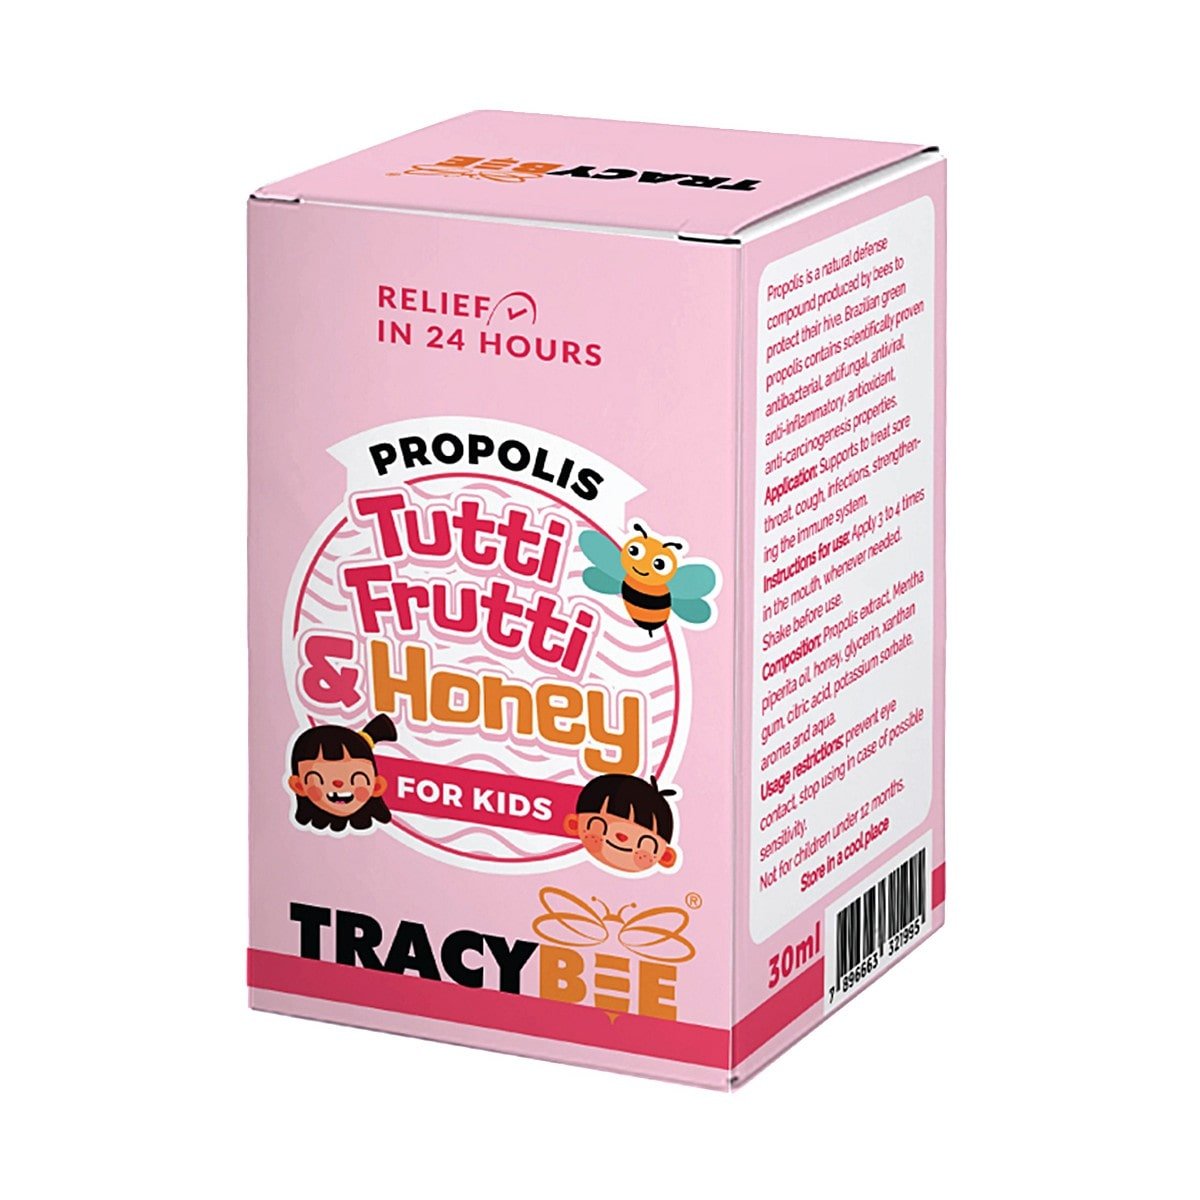 Xịt keo ong Tracybee Propolis Tutti Frutti & Honey For Kids 30ml cho bé vị